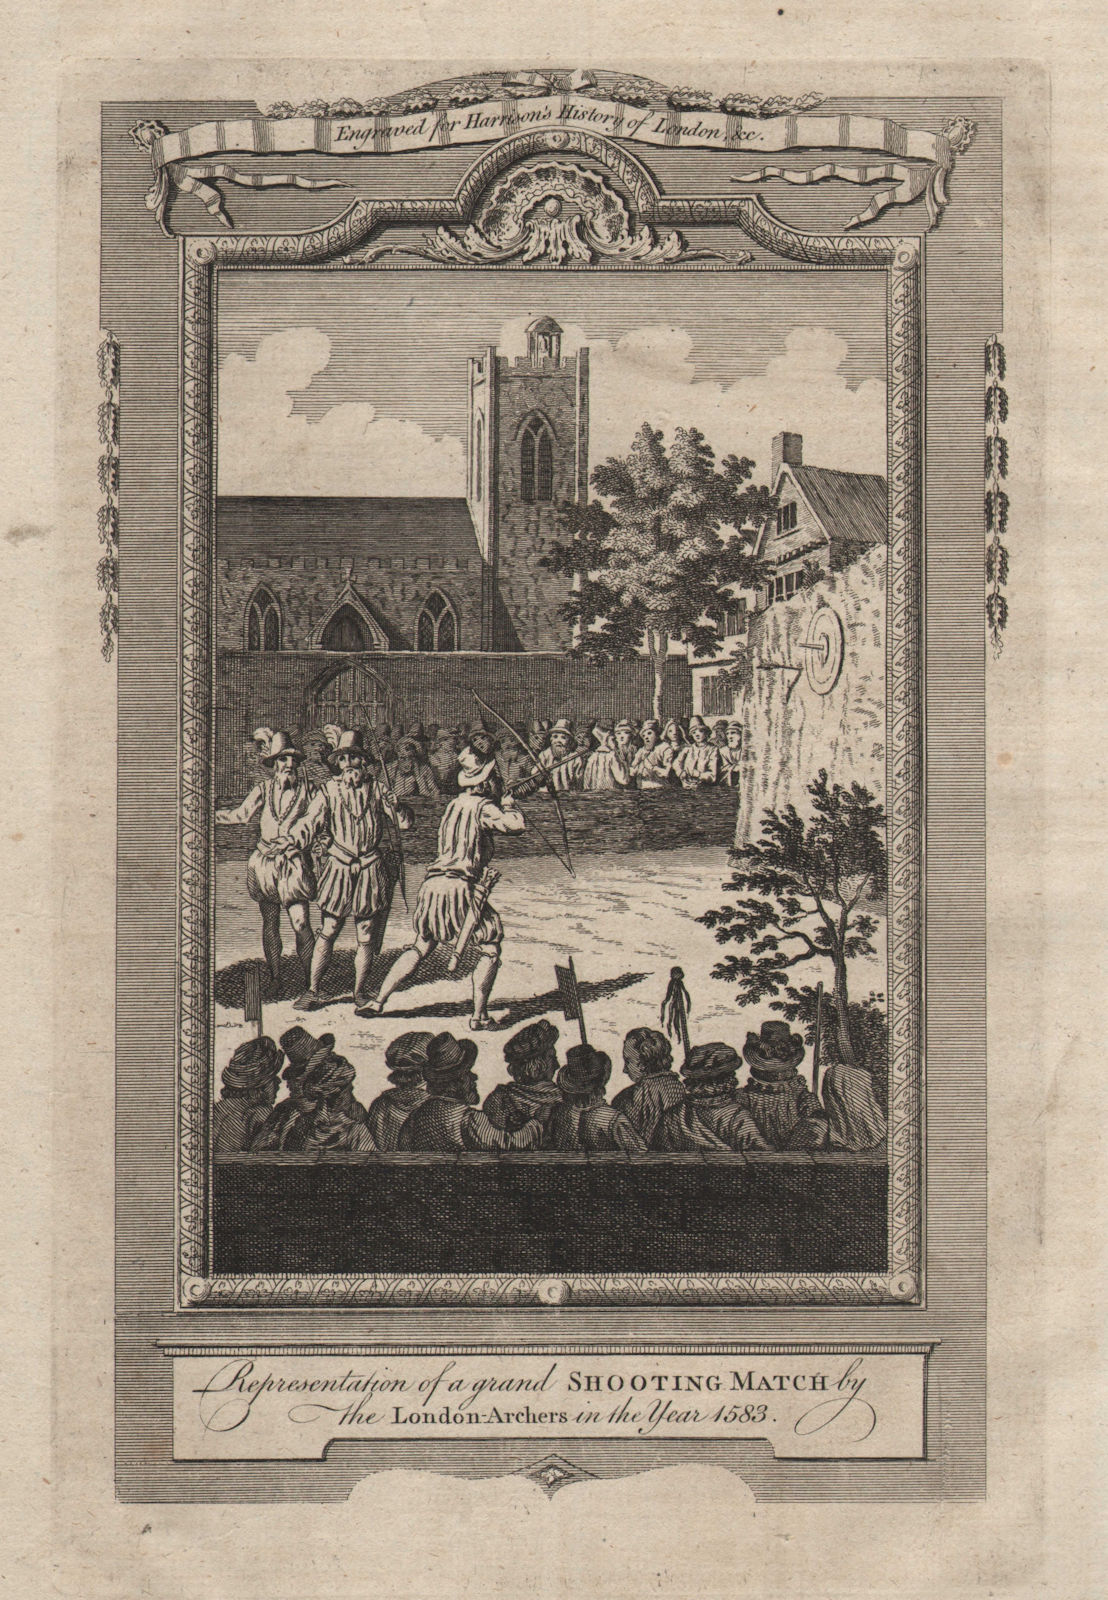 An archery match in London, 1583. London Archers. HARRISON 1776 old print